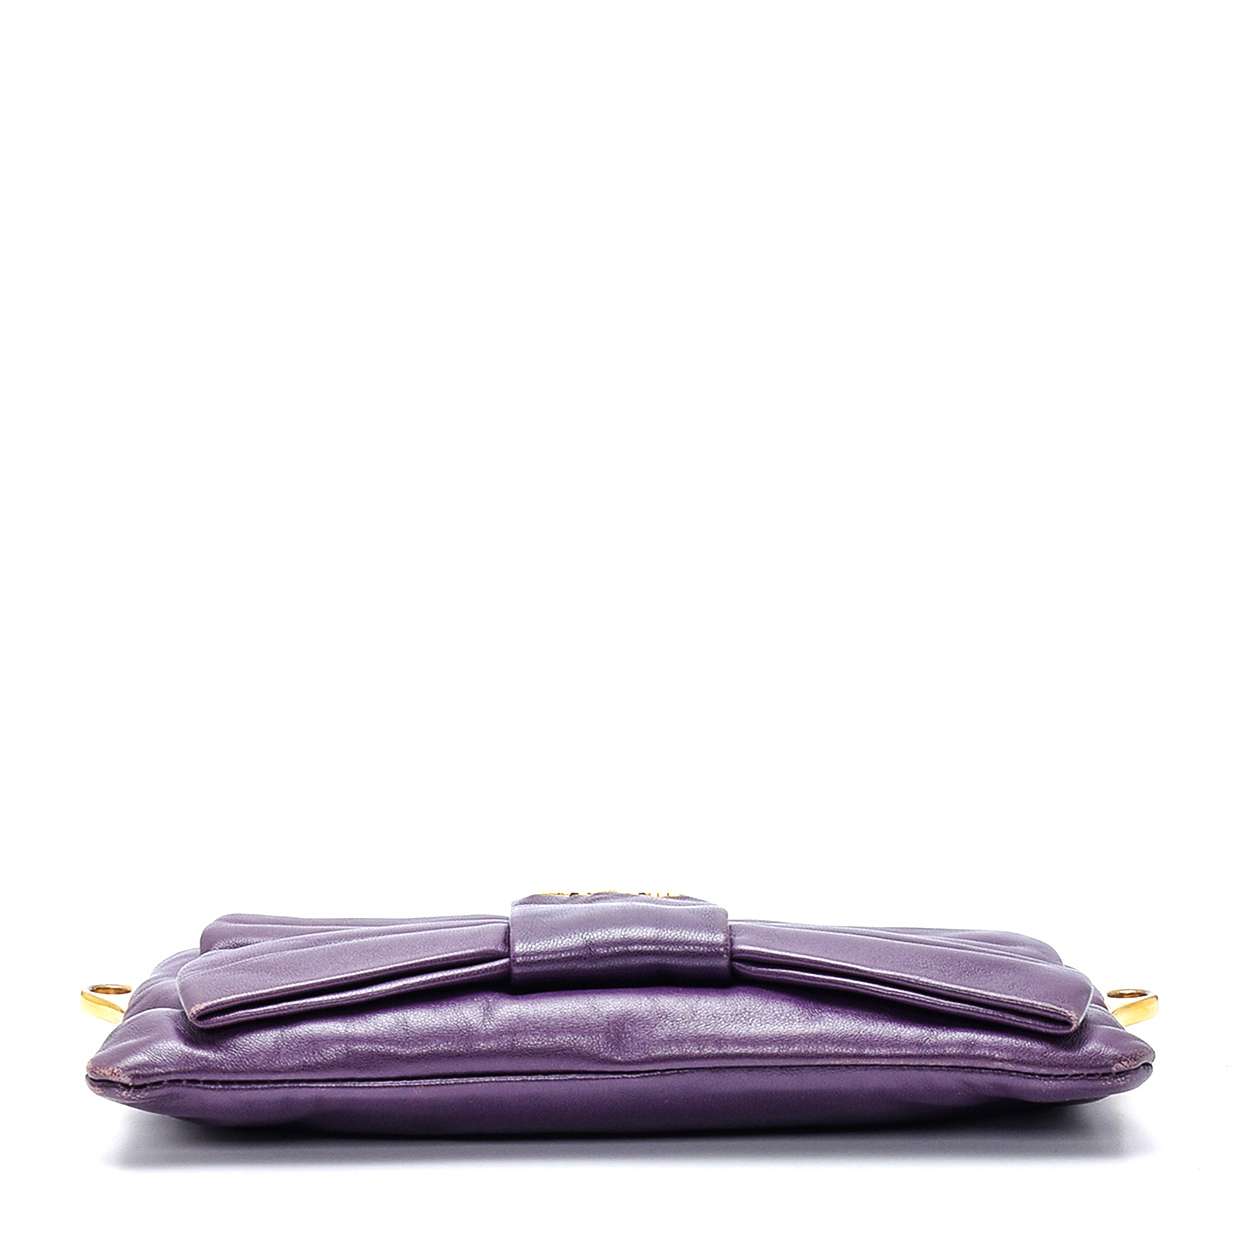 Prada - Purple Lambskin Leather Ribbon Mini Crossbody Bag